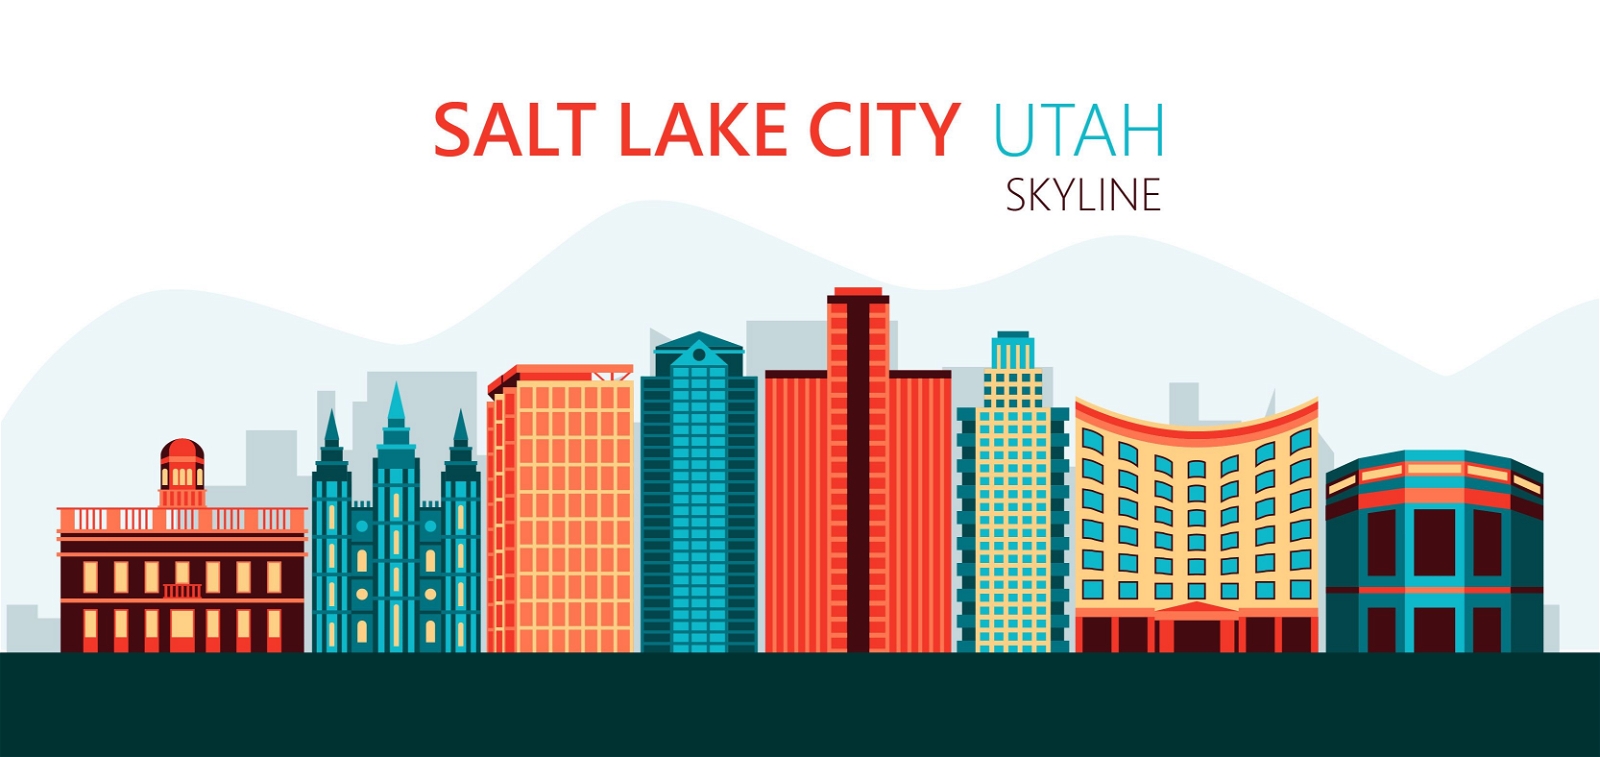 Skyline-Illustration von Salt Lake City